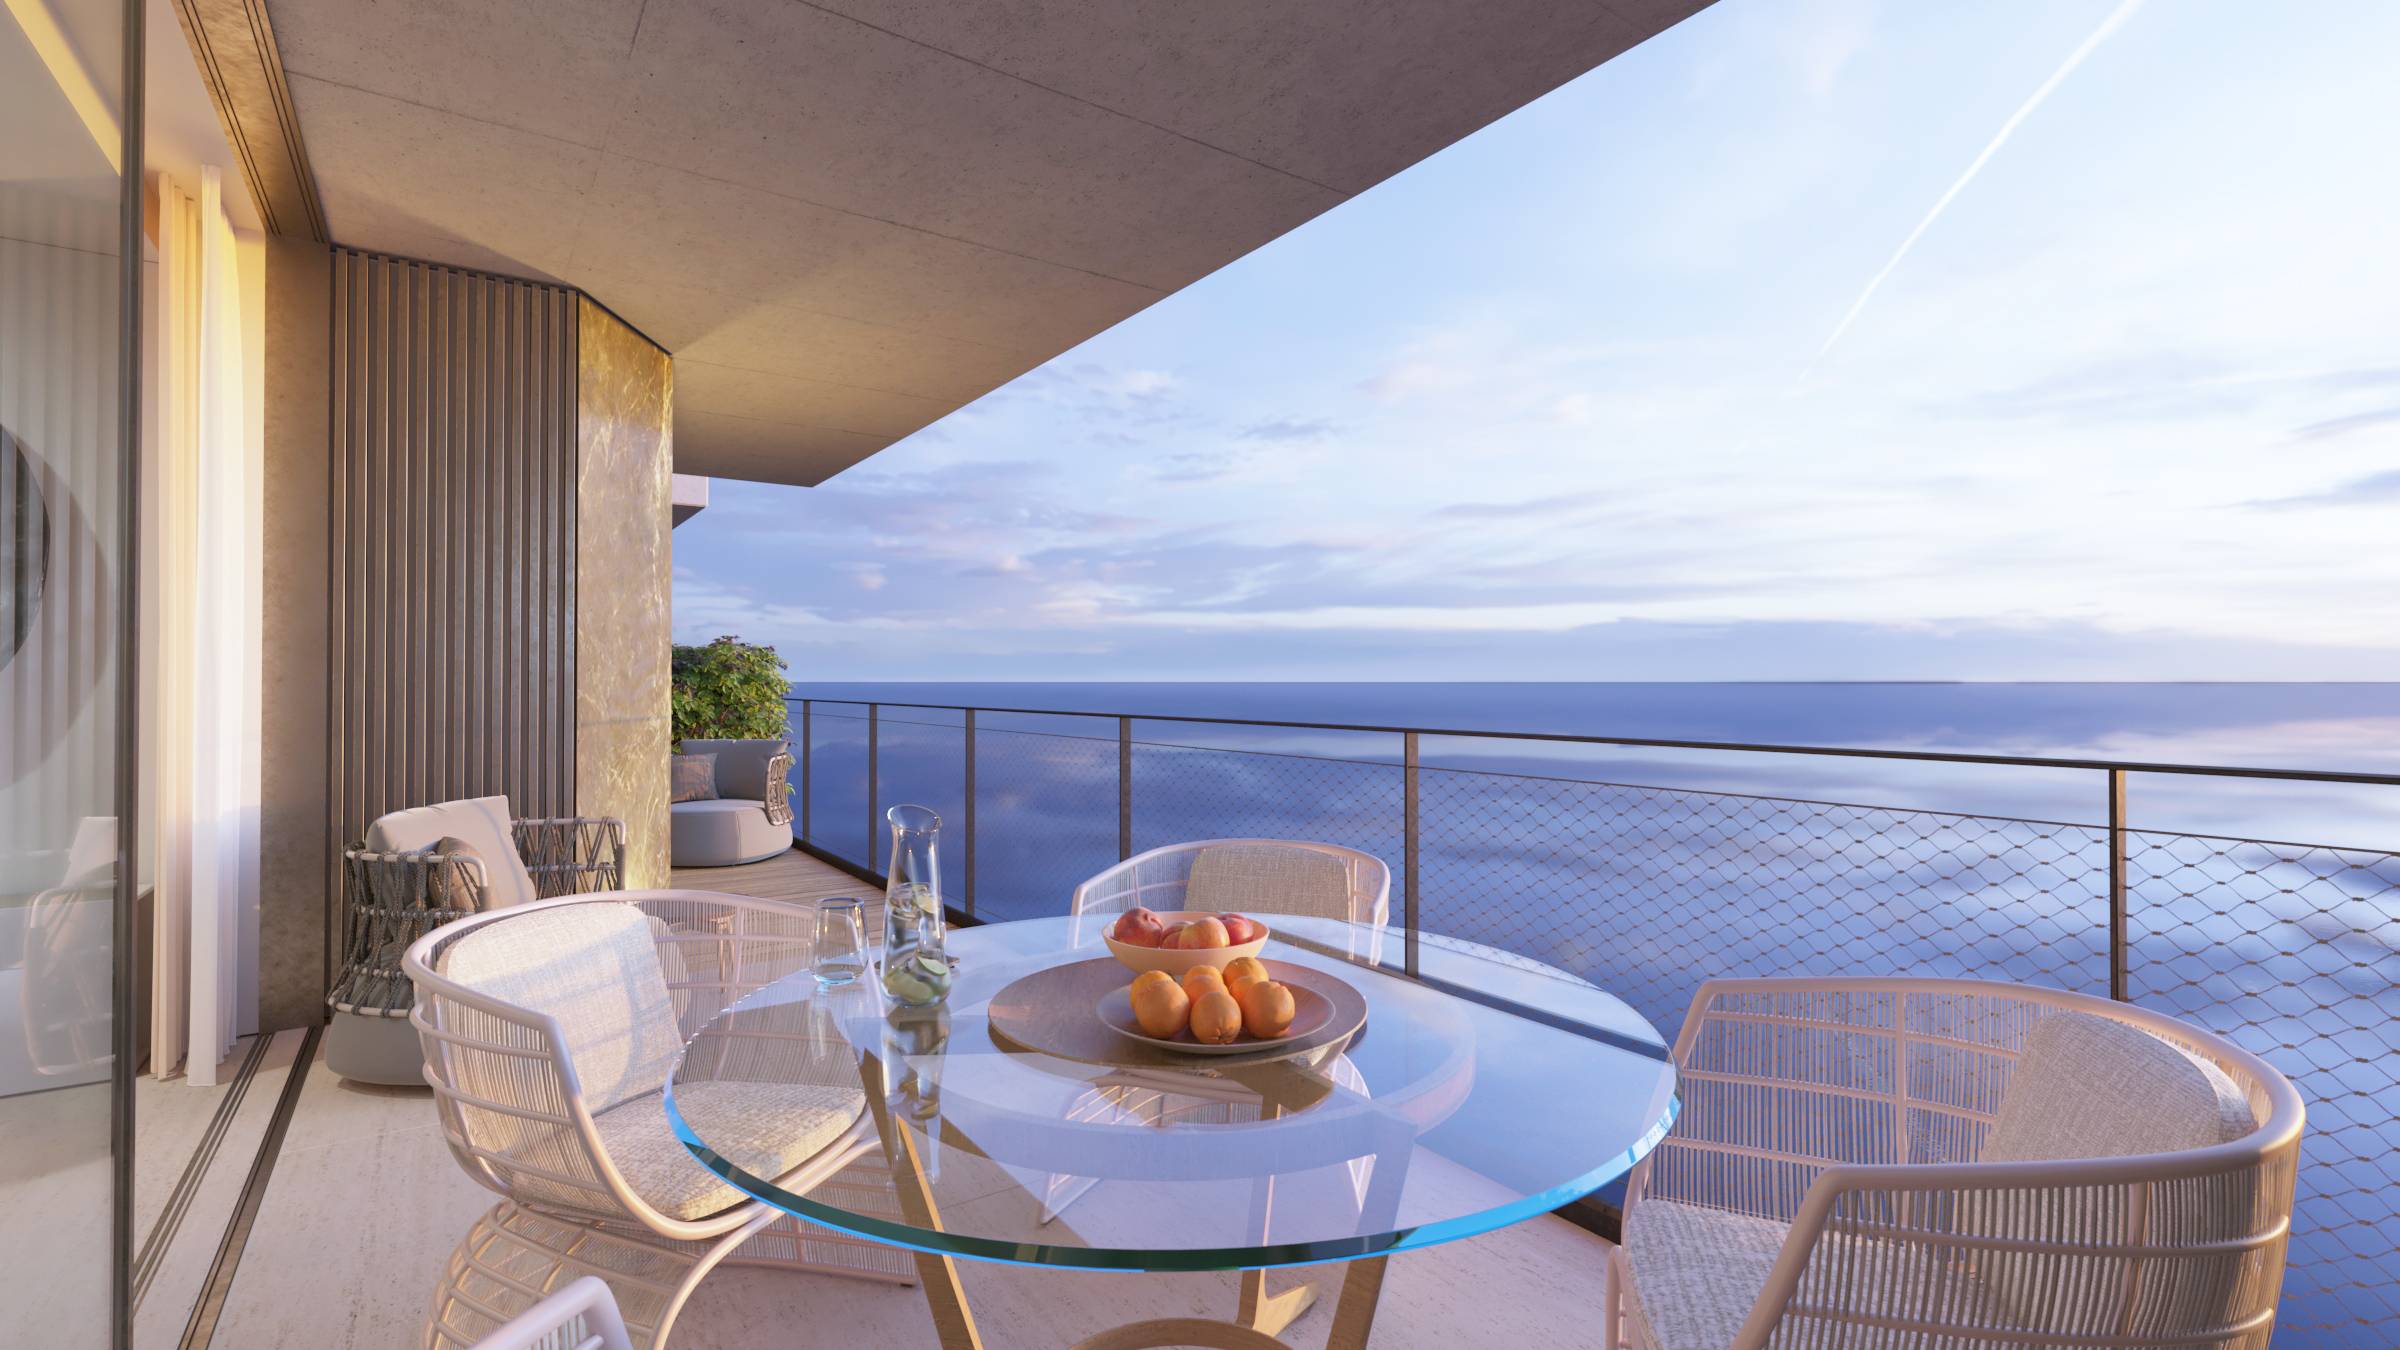 Savoy Monumentalis - Luxury three bedroom Apartments - Ocean Front Residences - Funchal - Madeira Island